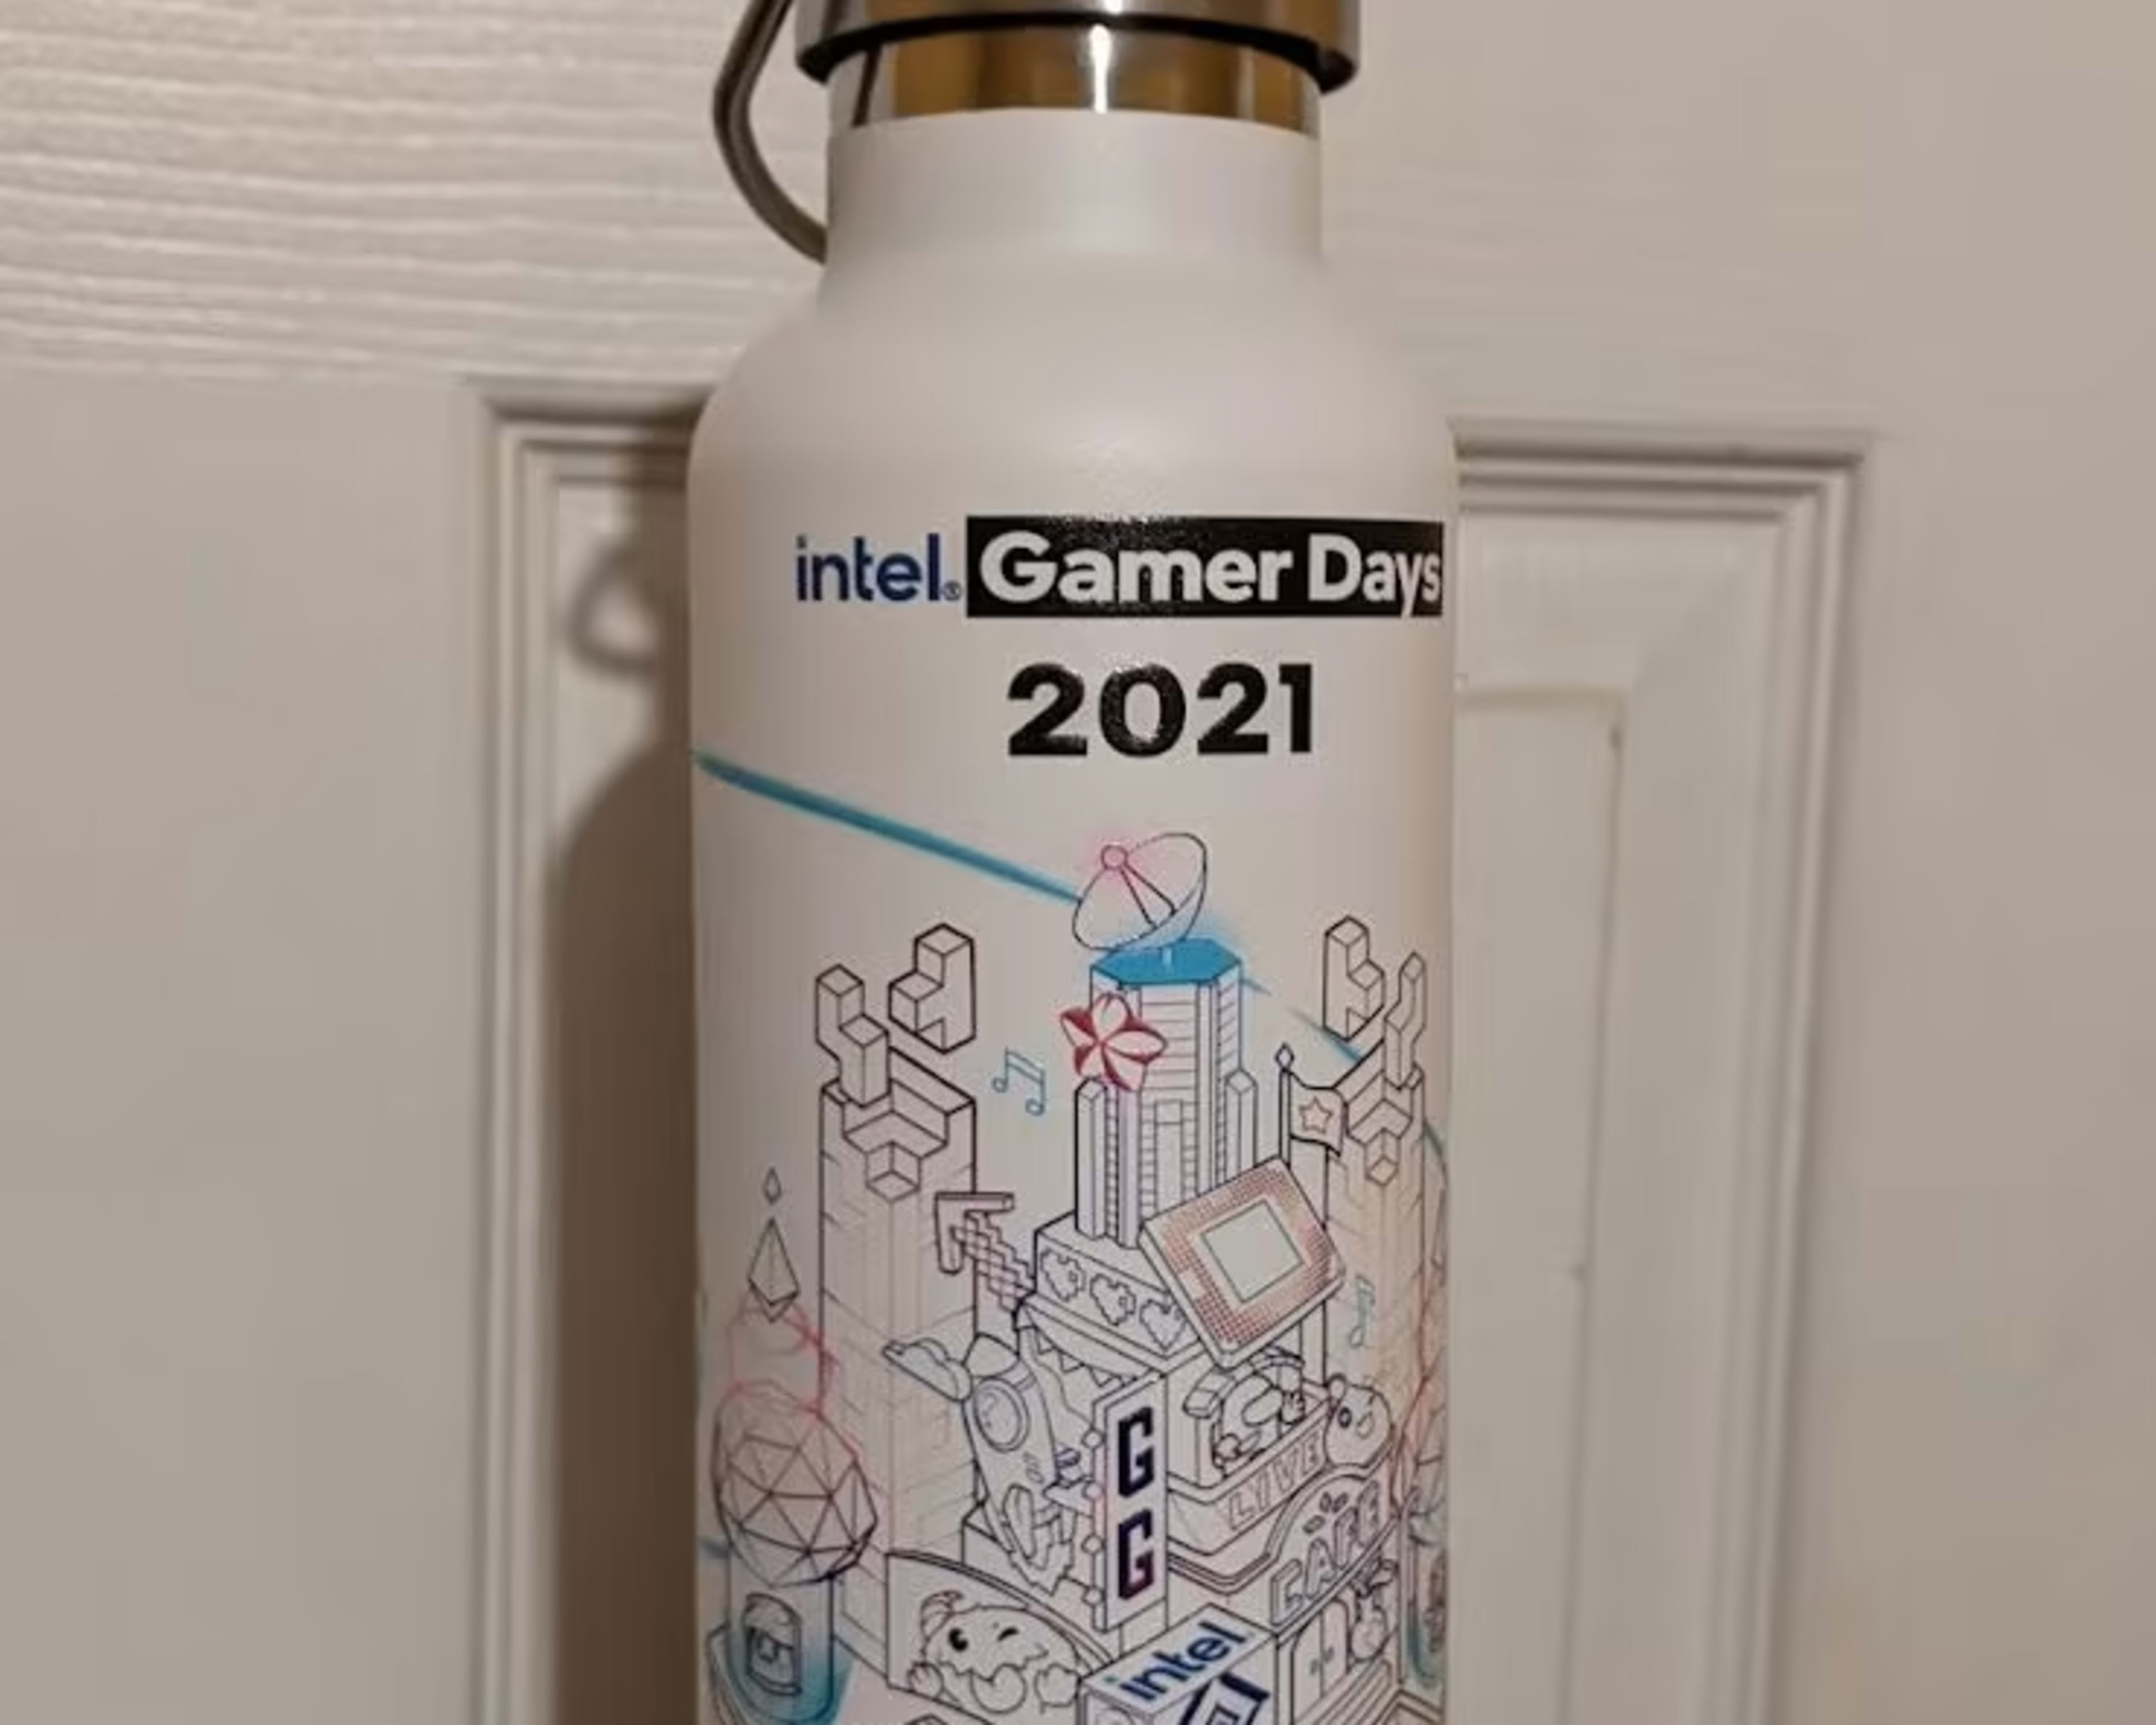 BNOB Intel Gamer Days 2021 Insulated Thermal Steel Water Bottle